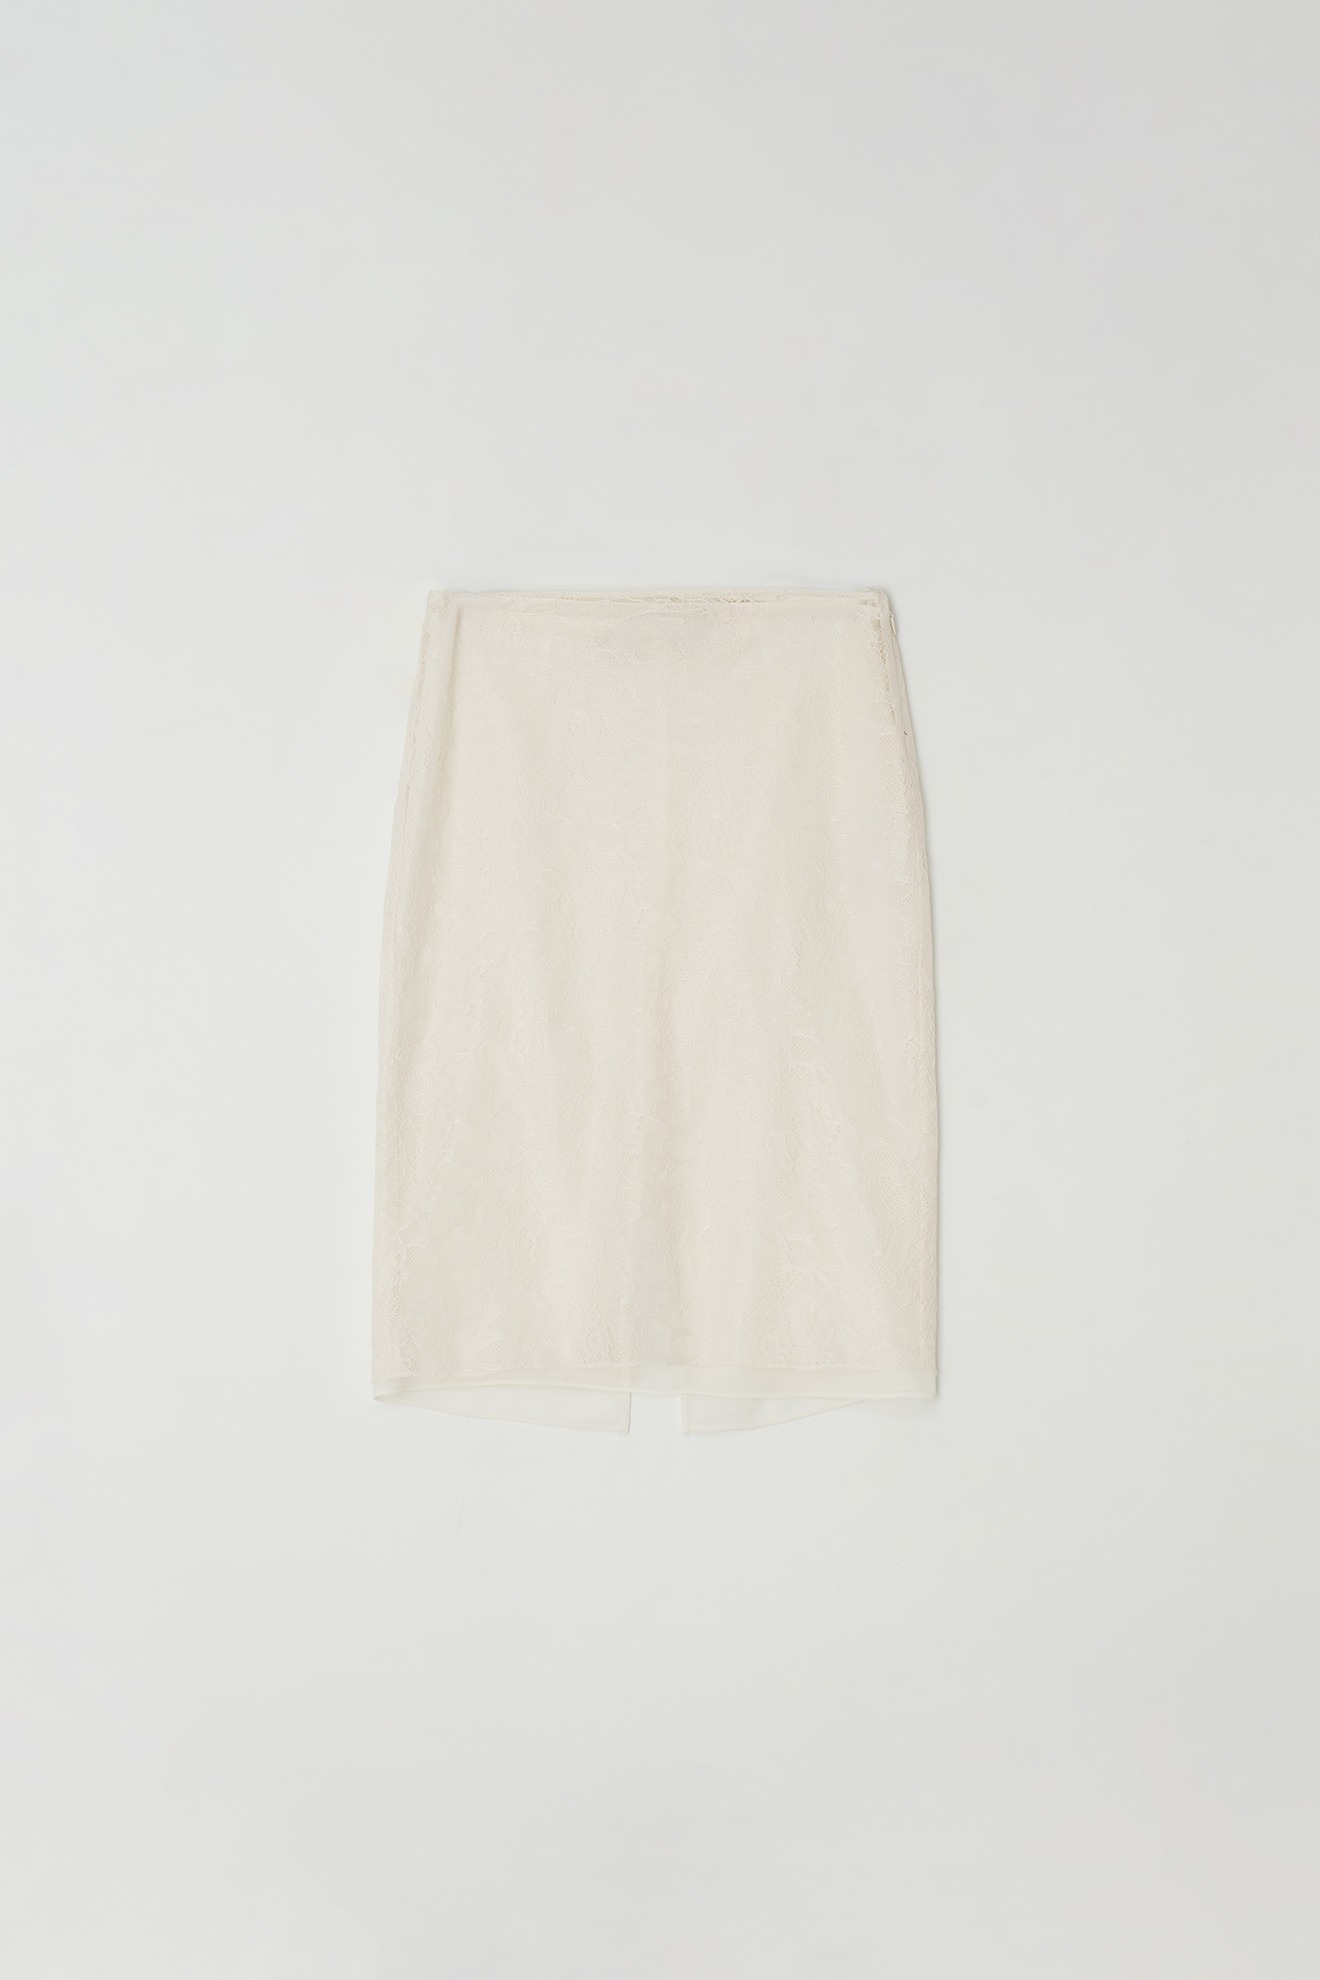 Flower Lace Skirt (cream)